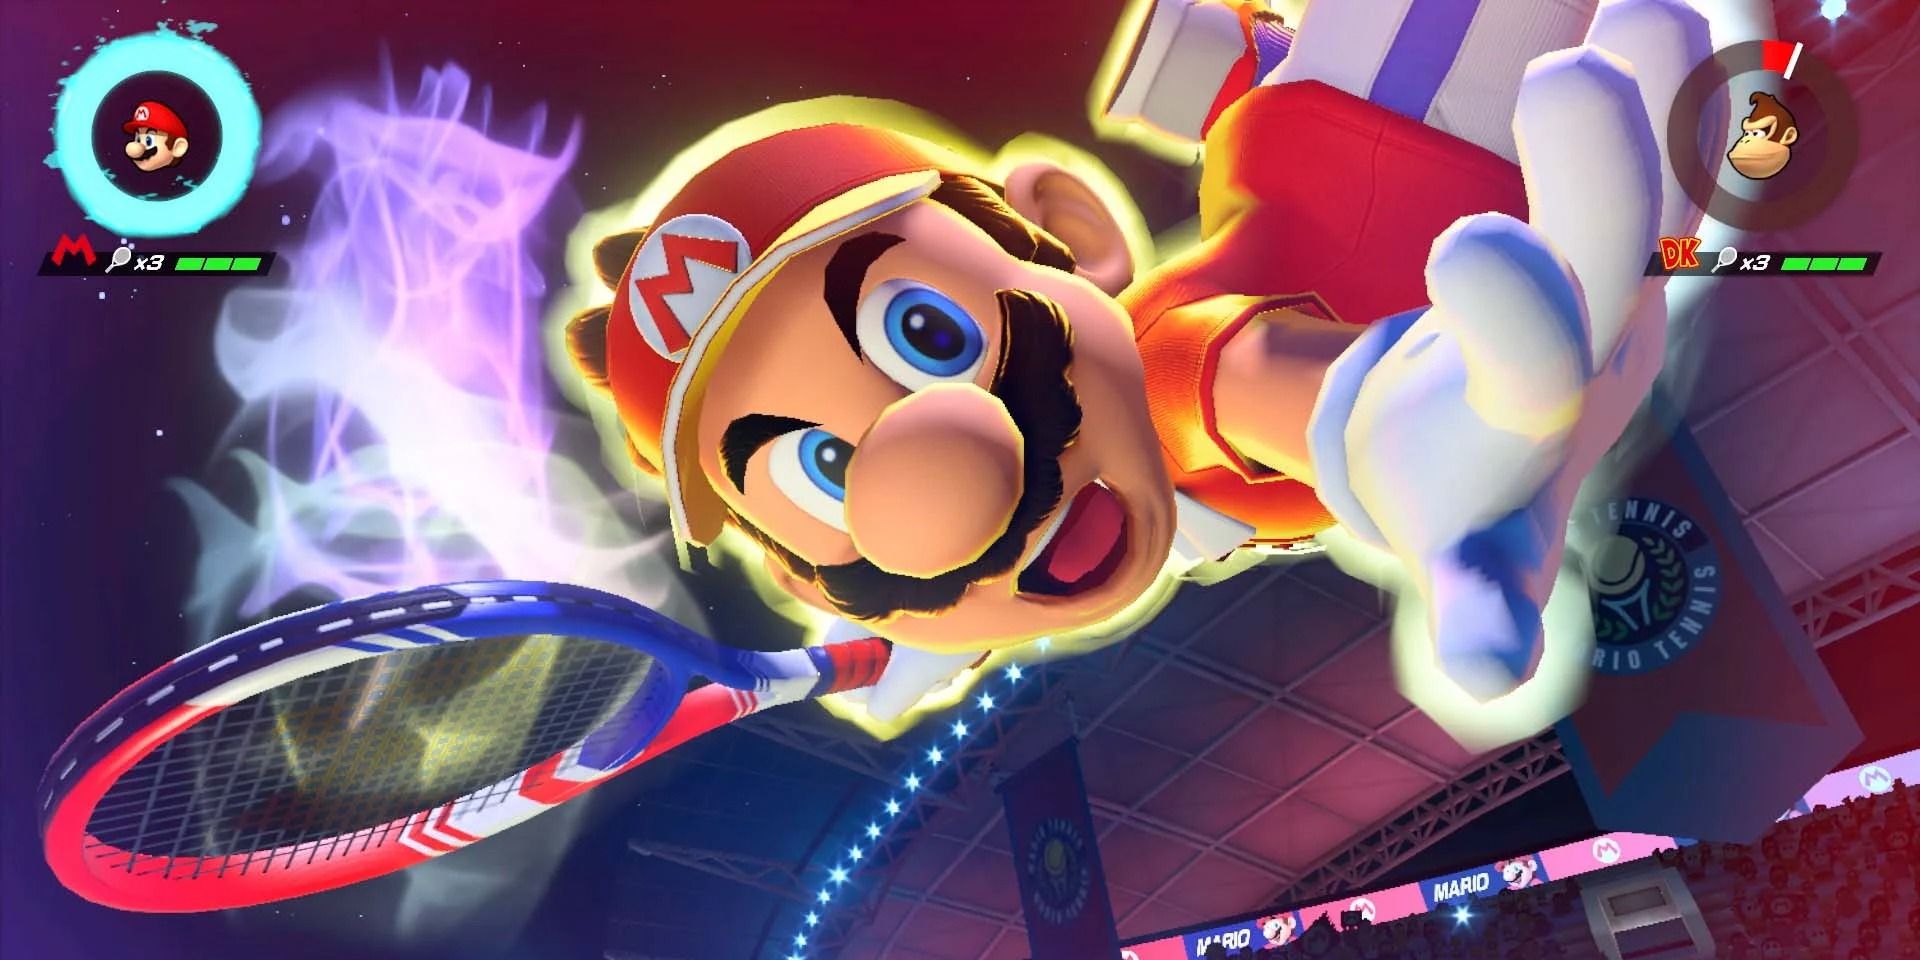 A screenshot showing Mario performing a special move in Mario Tennis Aces